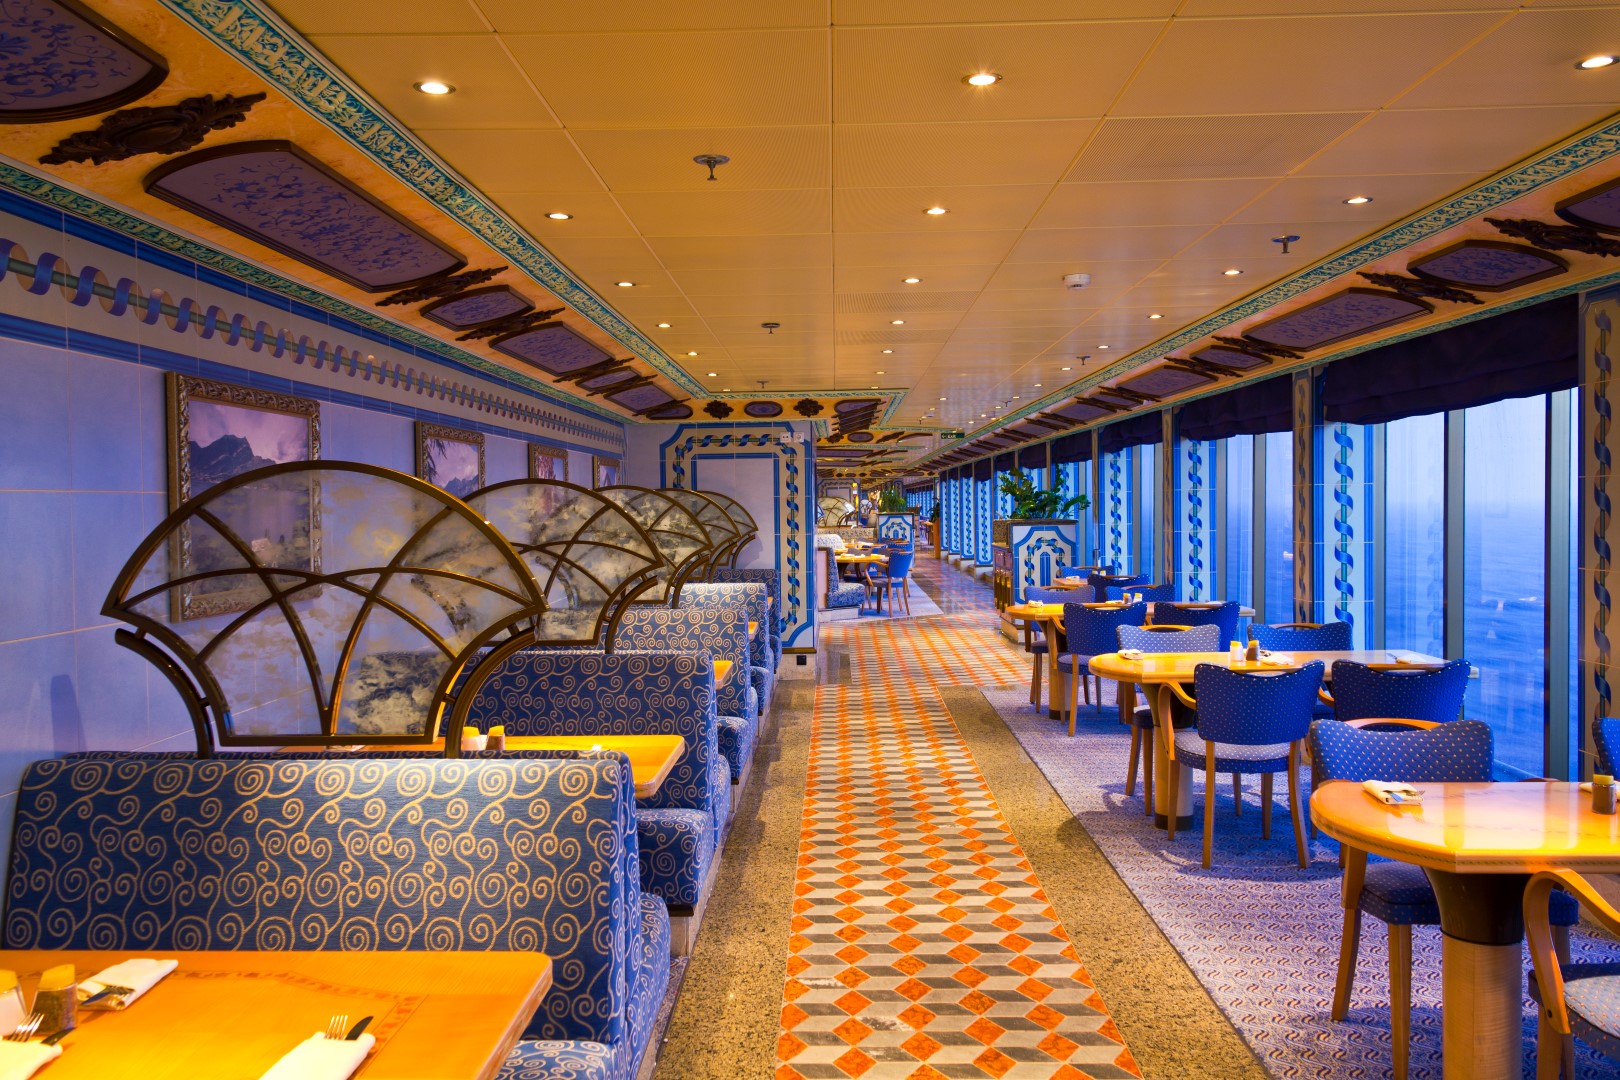 cruise ship dining